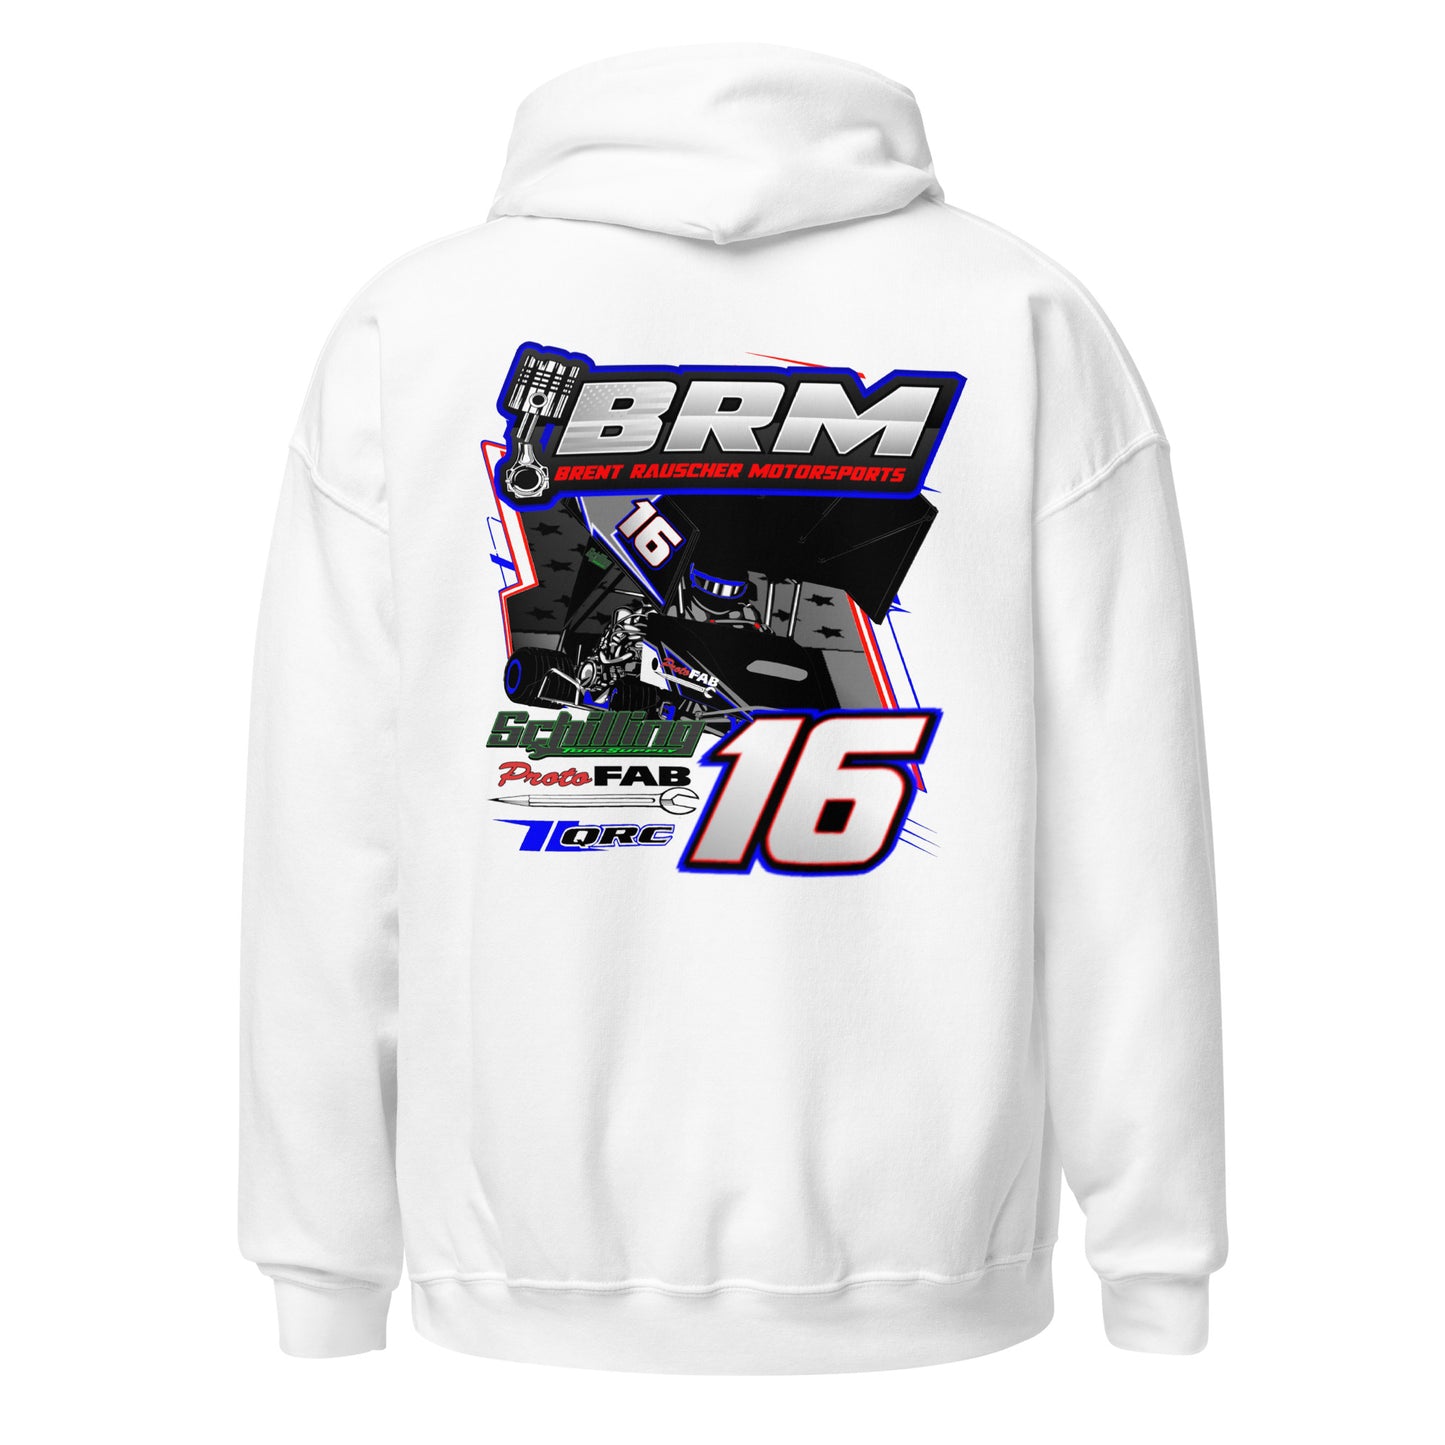 Brent Rauscher Motorsports Adult Hoodie Sweatshirt